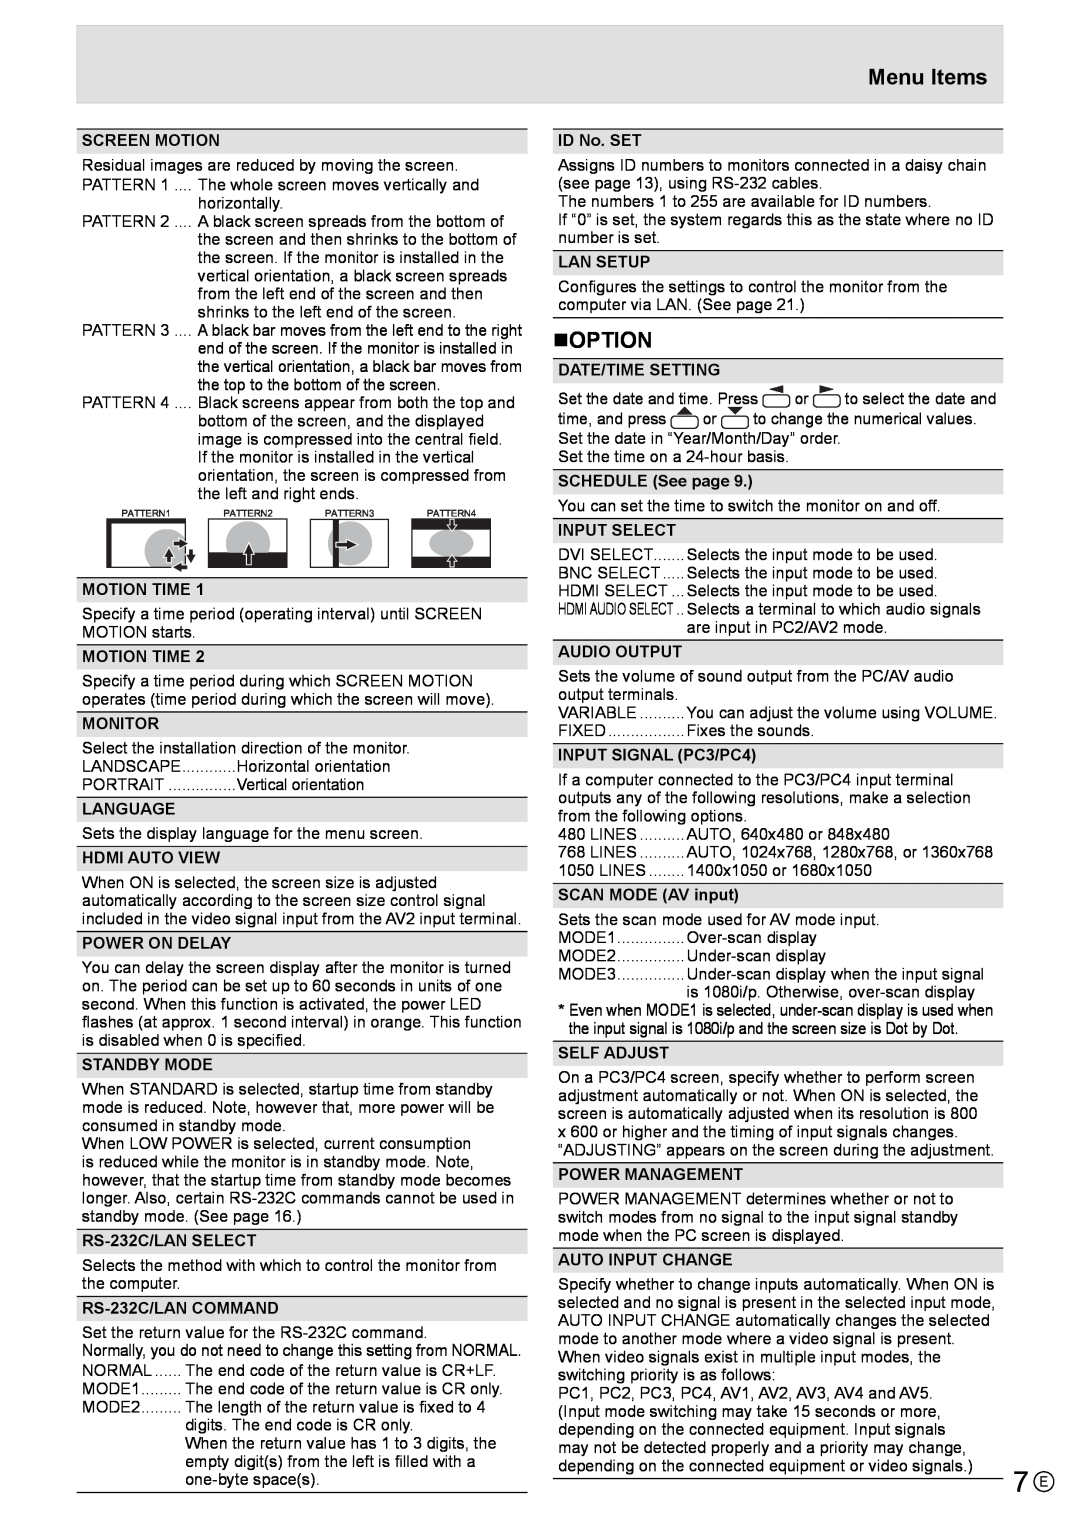 Mitsubishi Electronics LDT521V „Option, Screen Motion, Motion Time, Monitor, Language, Hdmi Auto View, Power On Delay 